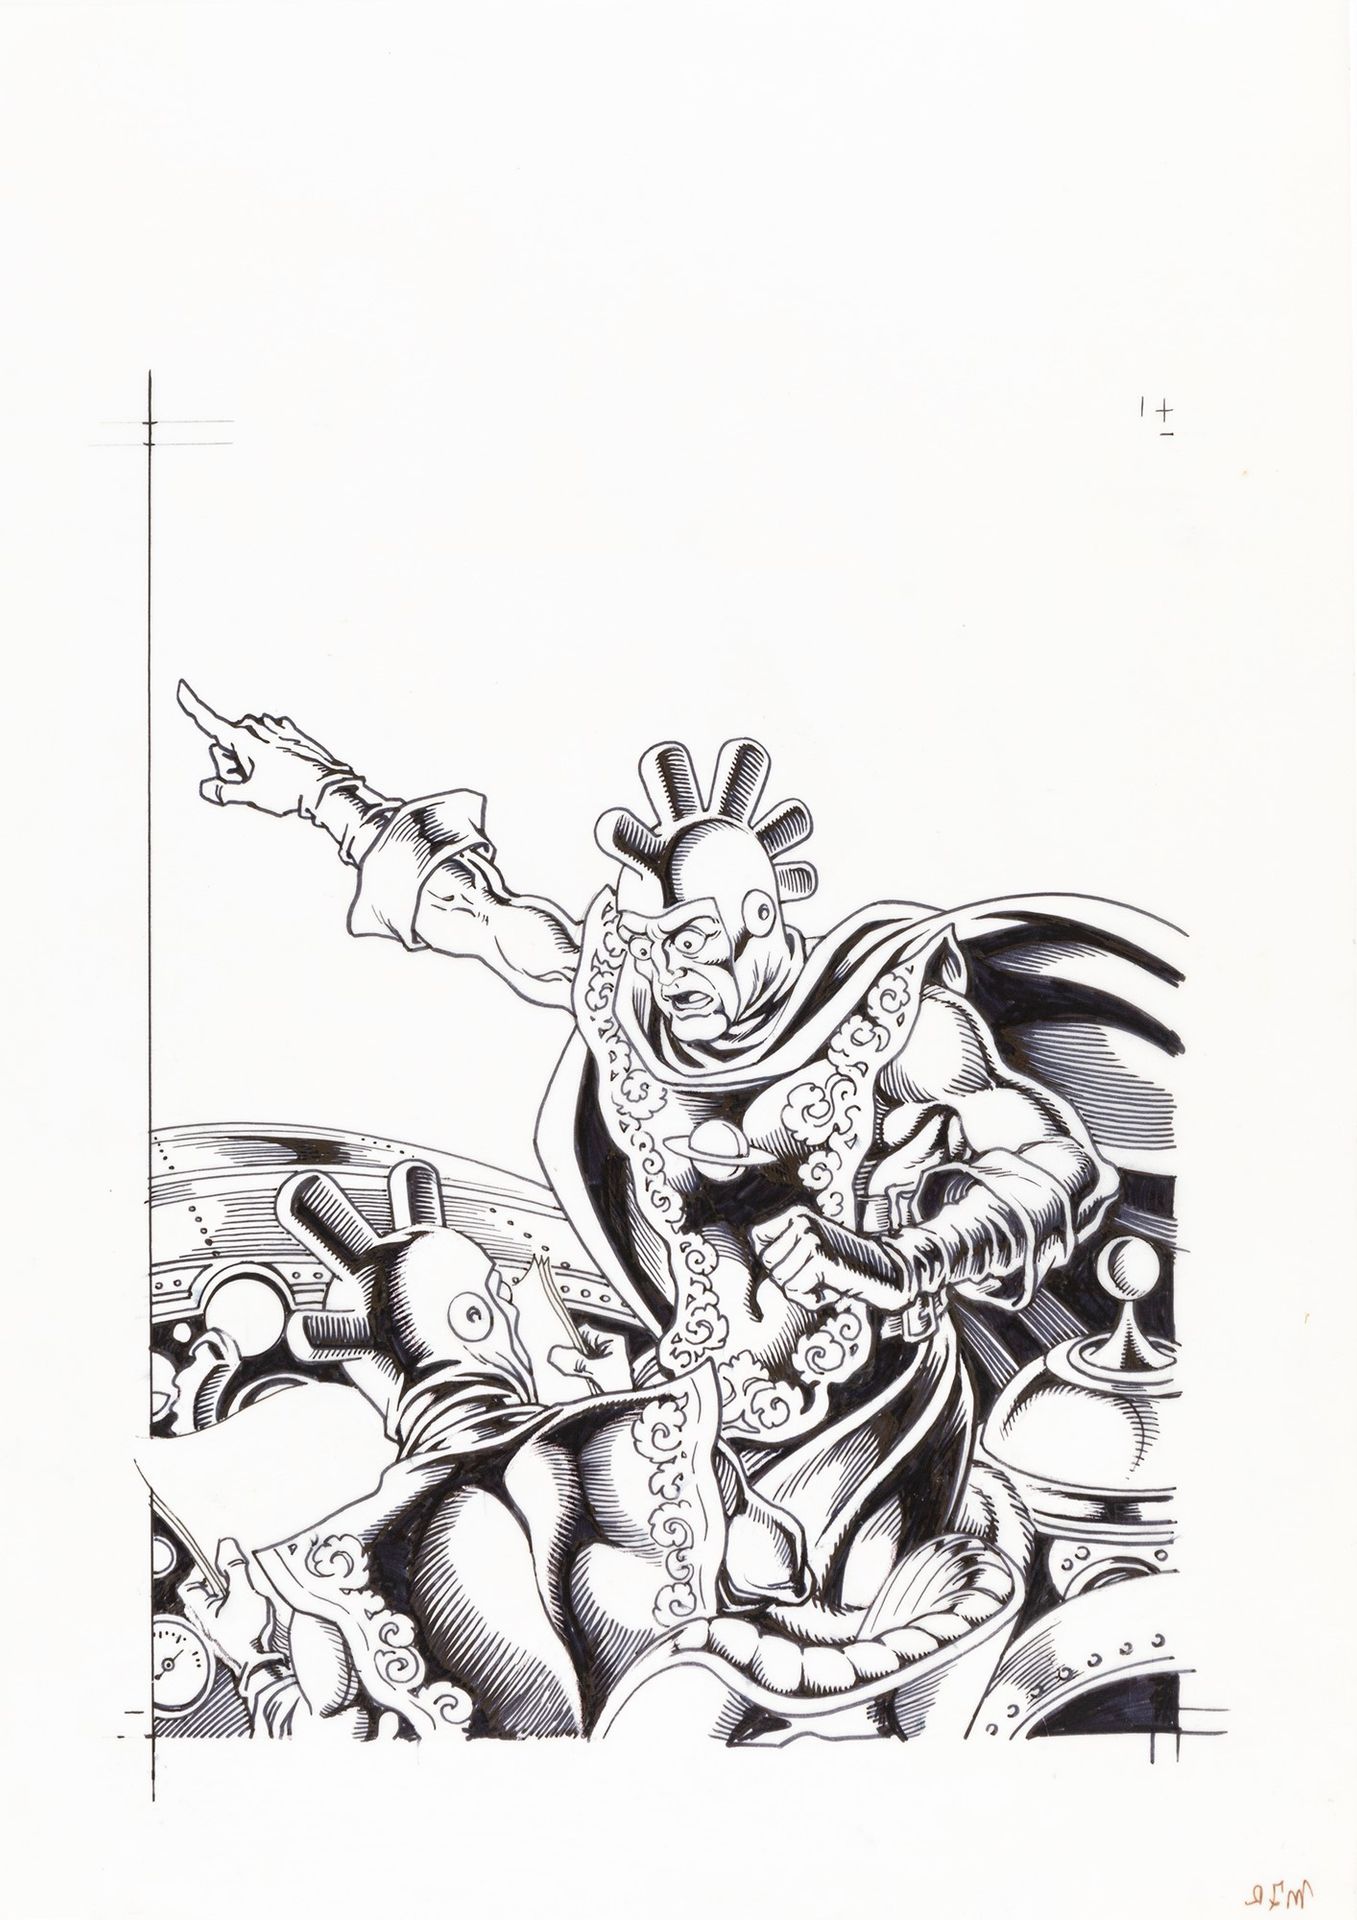 MAGNUS (ROBERTO RAVIOLA) Comic Art no. 77, 1991

ink and felt-tip pen on tracing&hellip;